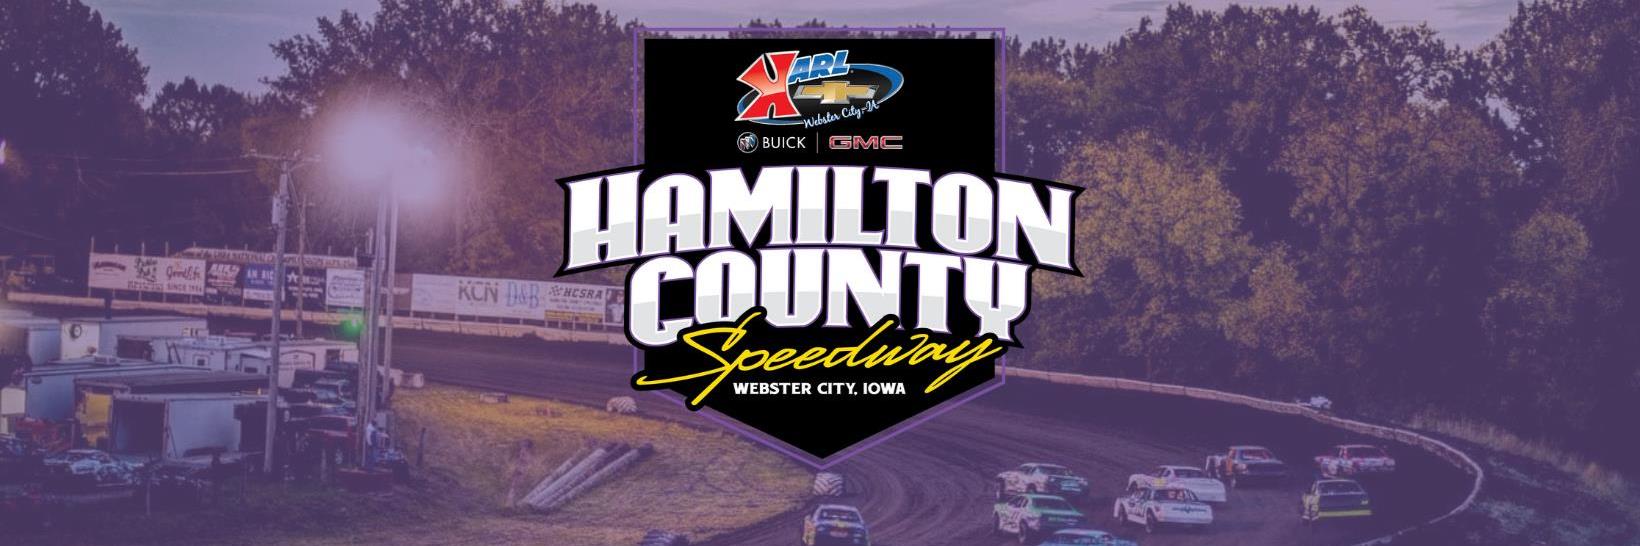 7/30/2022 - Hamilton County Speedway